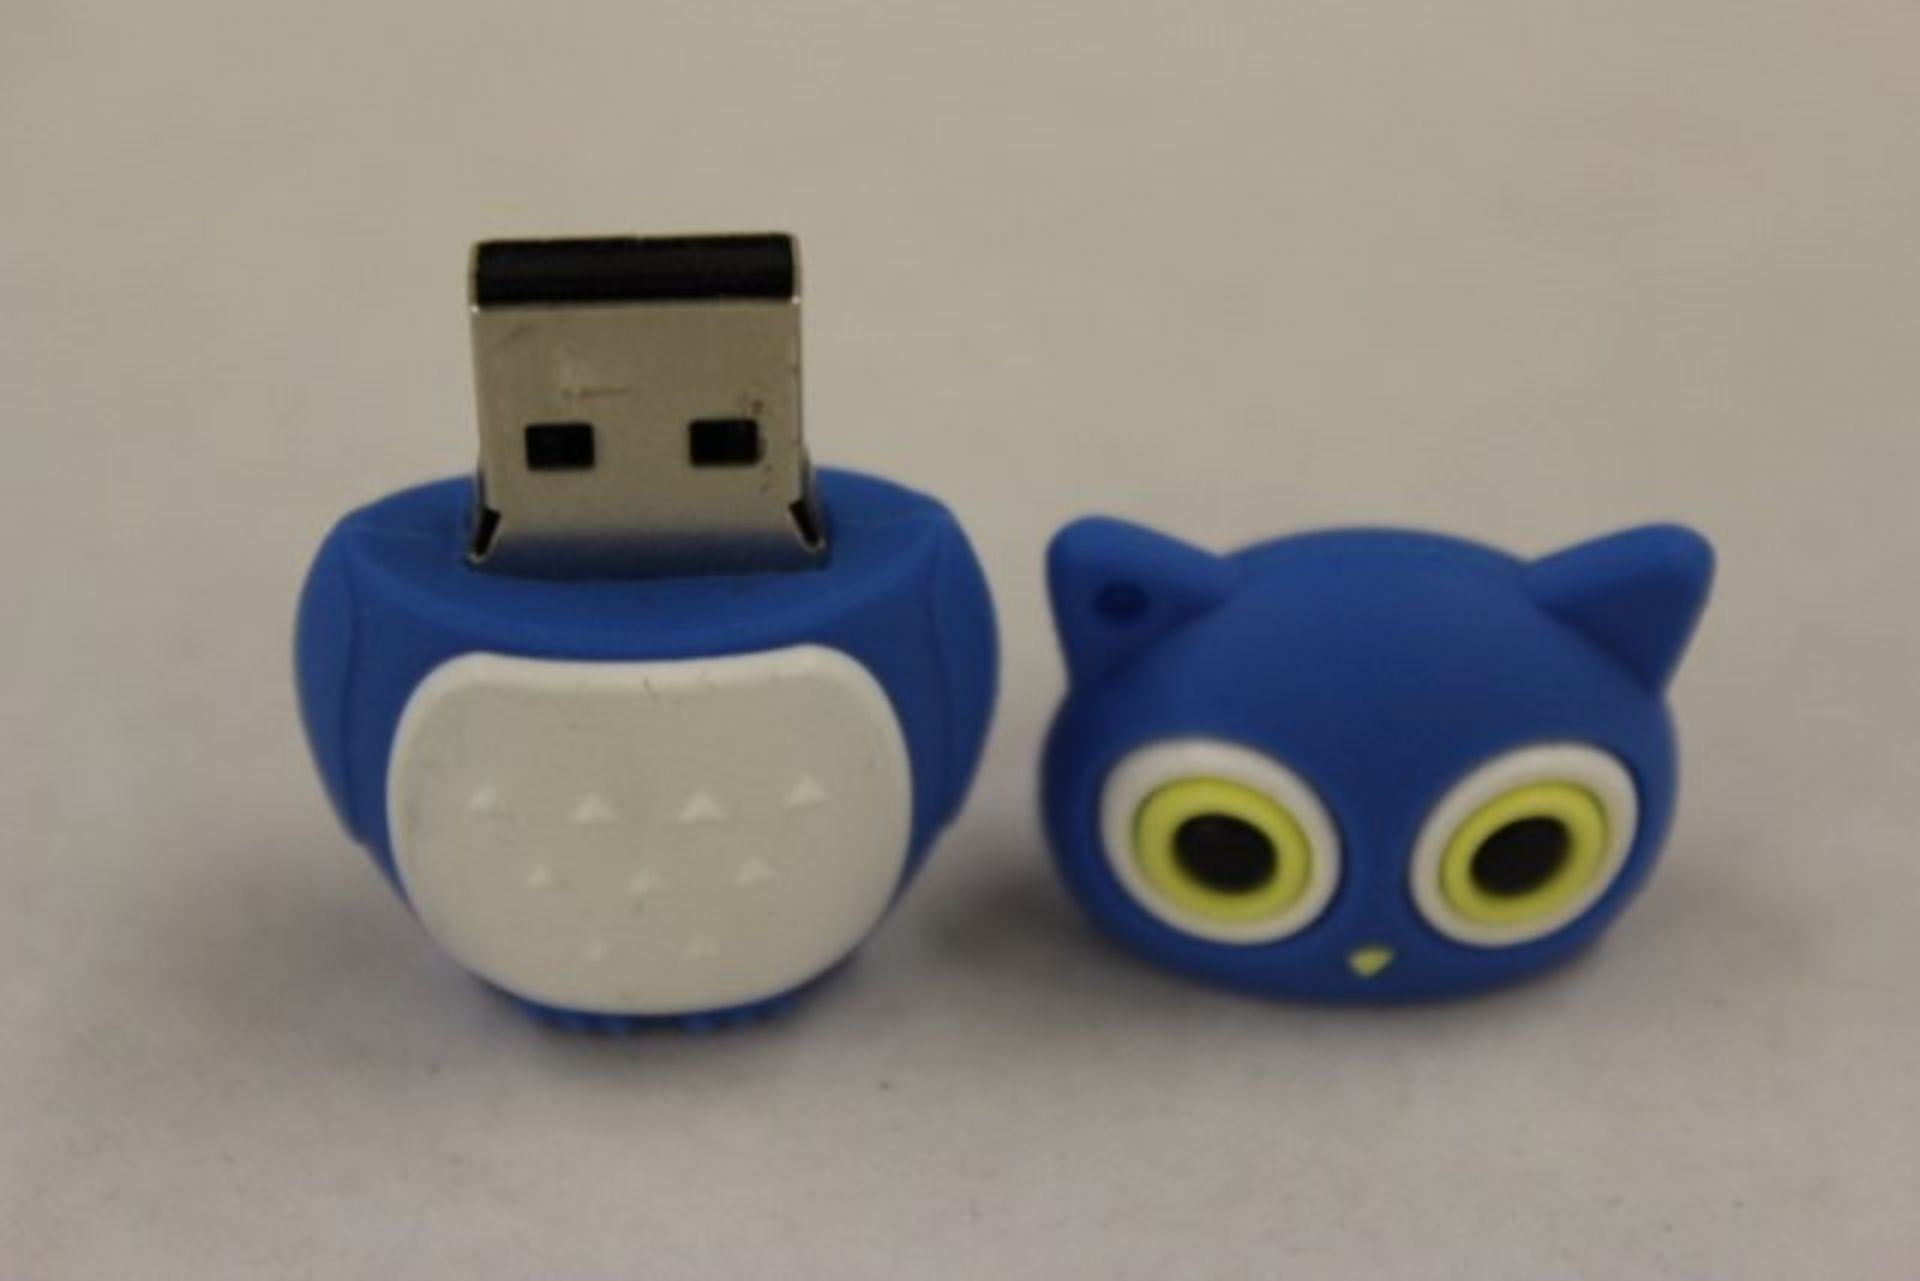 Grade U Owl USB Flash Drive - Image 2 of 2